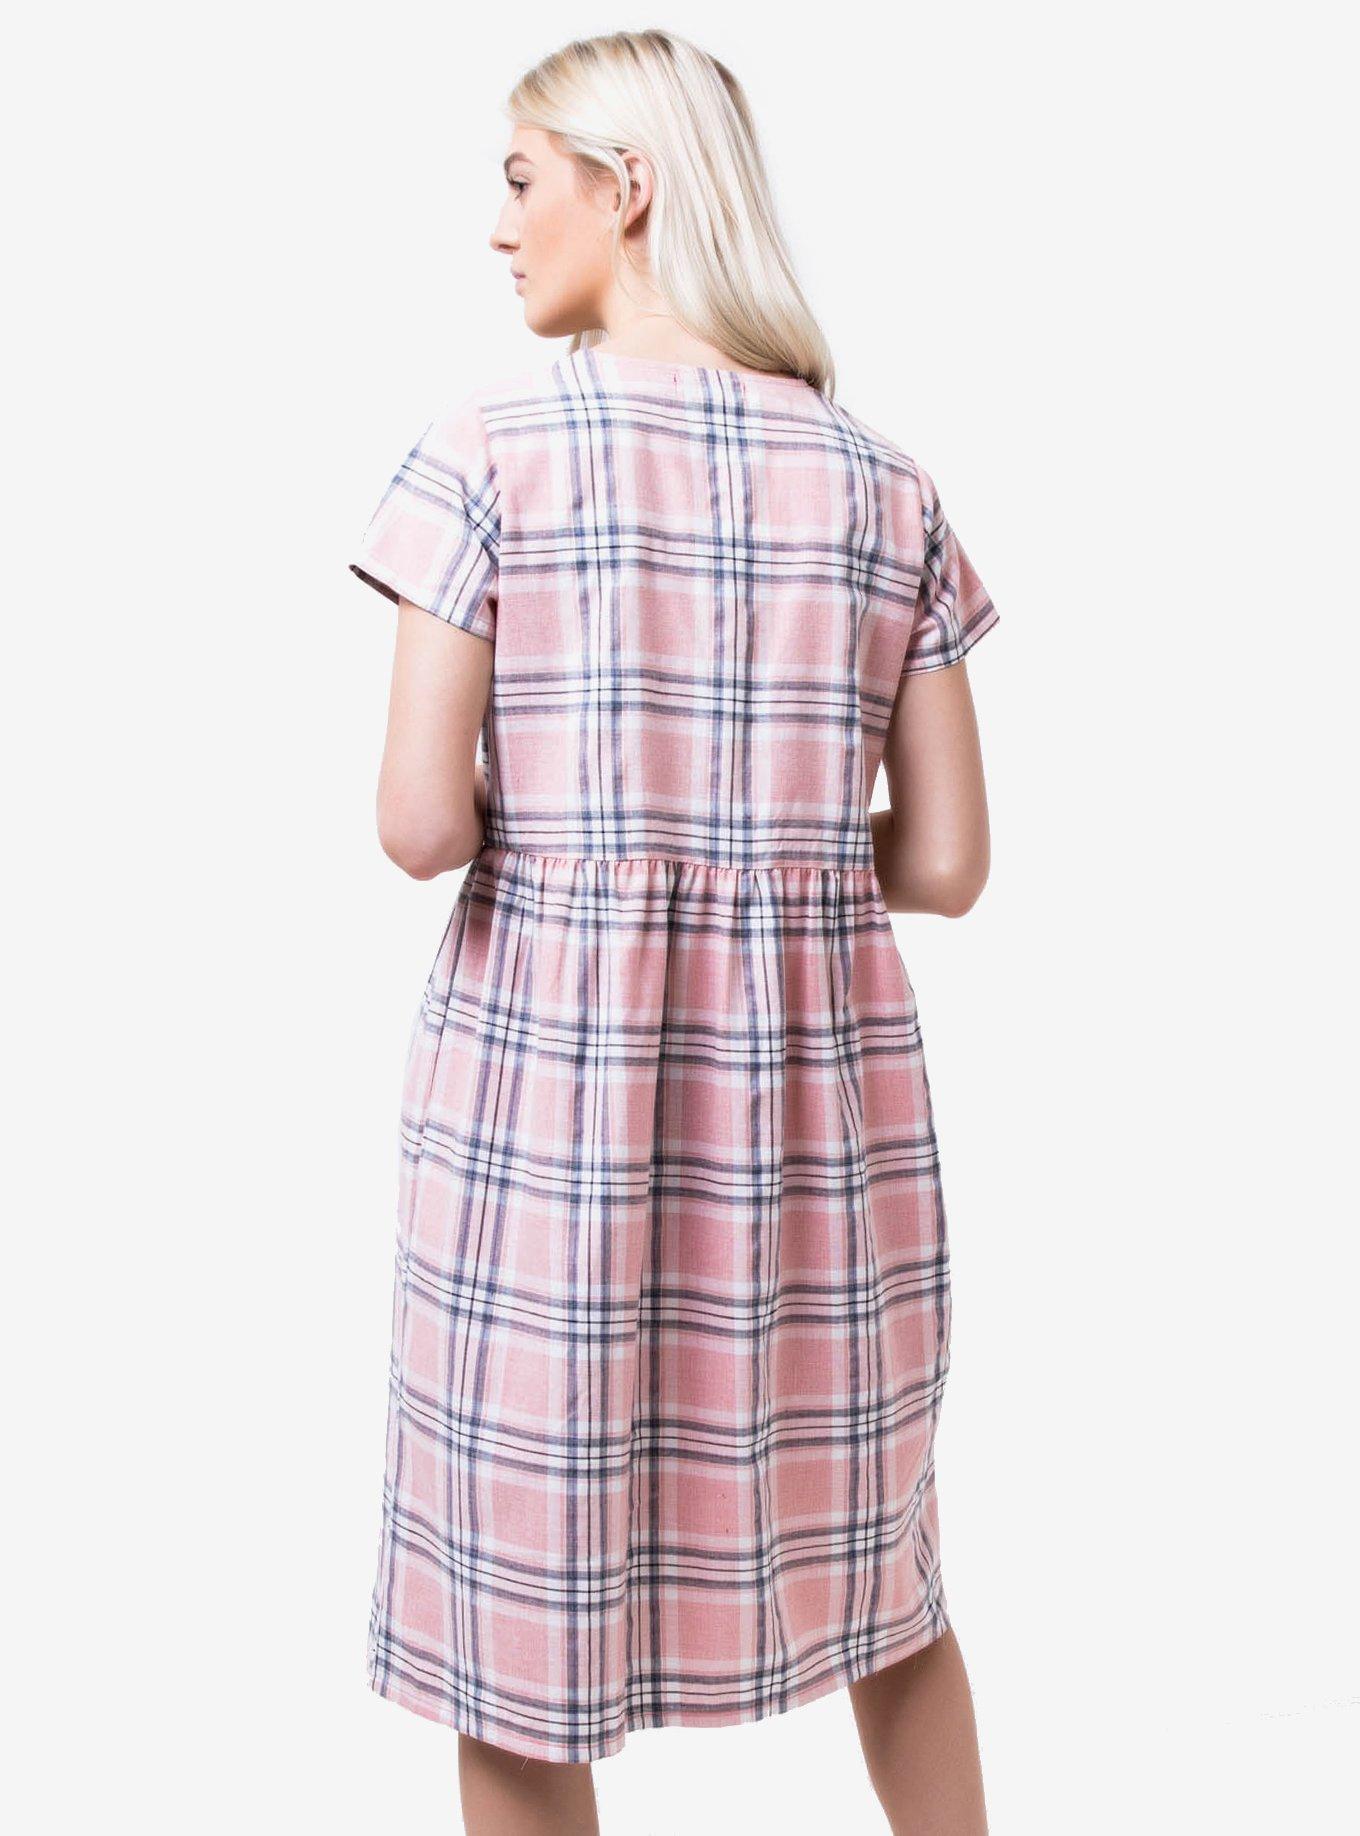 Daisy Street Pink Plaid Button-Front Dress, PLAID - PINK, alternate